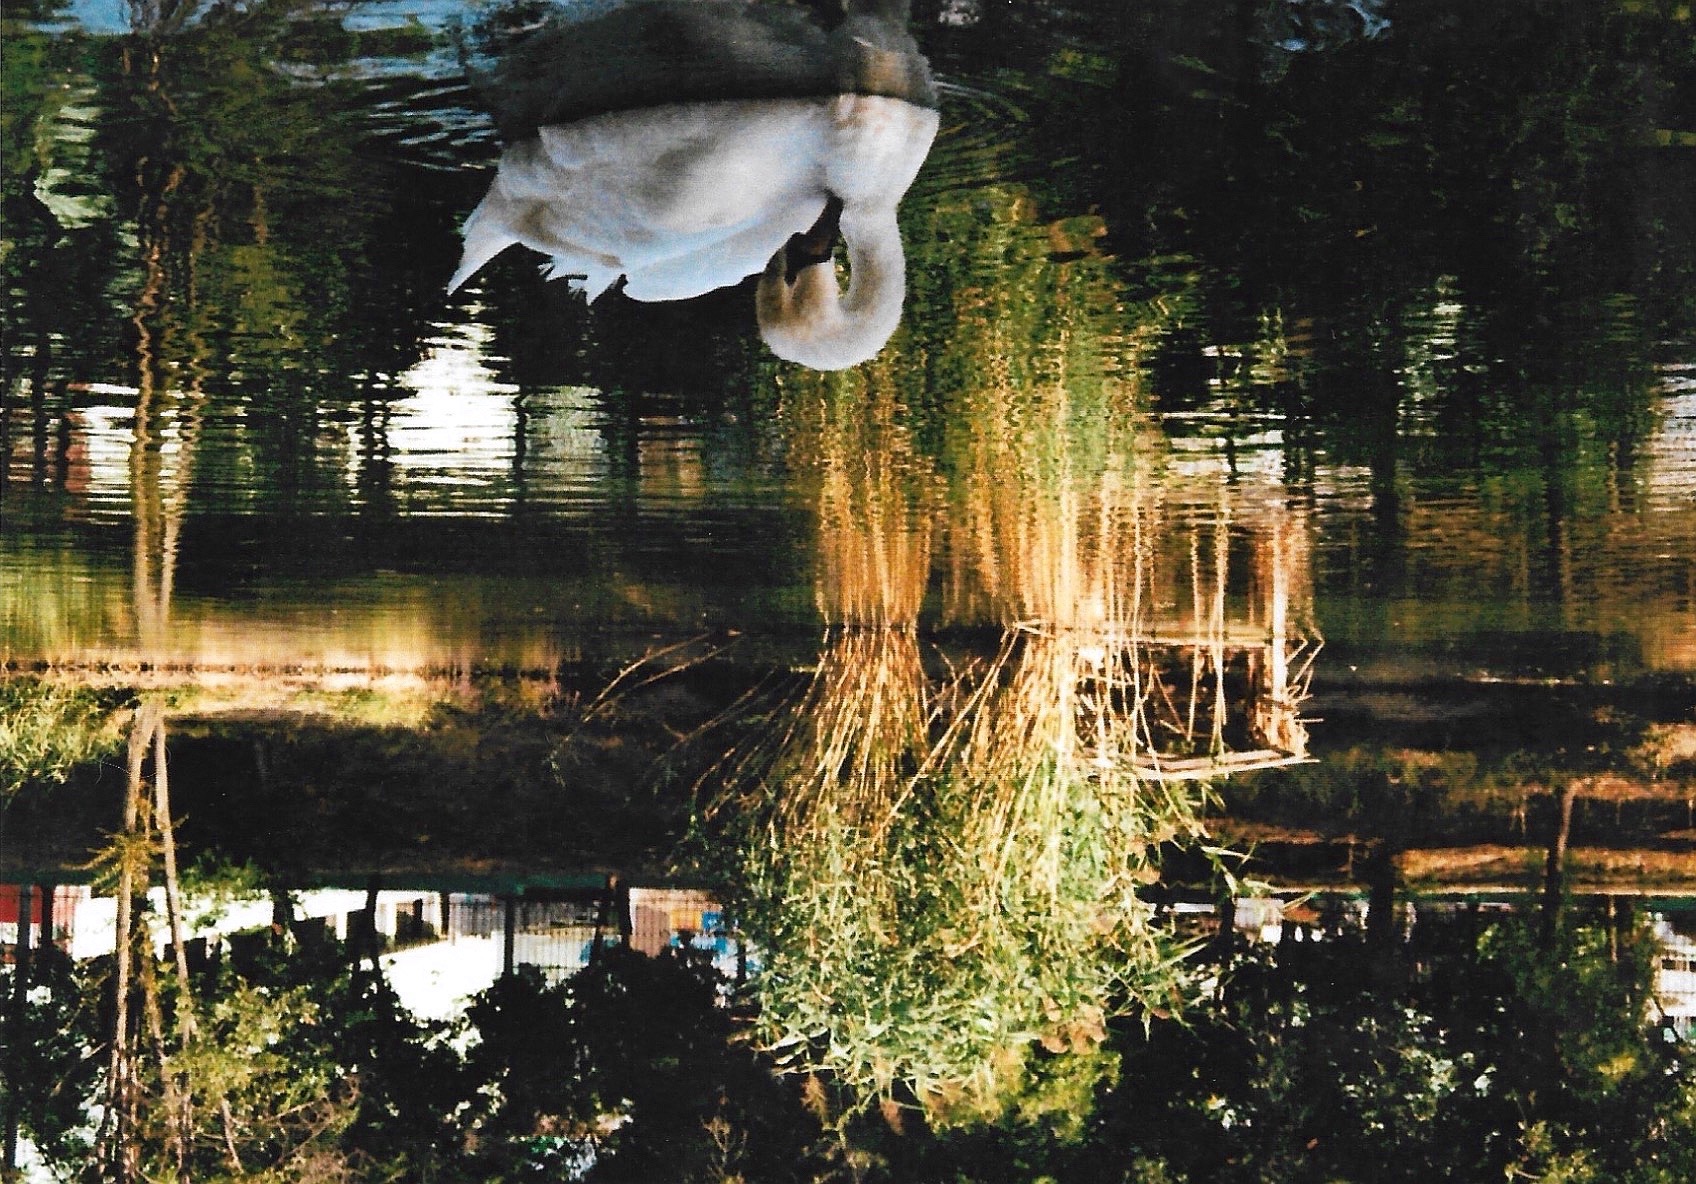 moldavian pond with swan